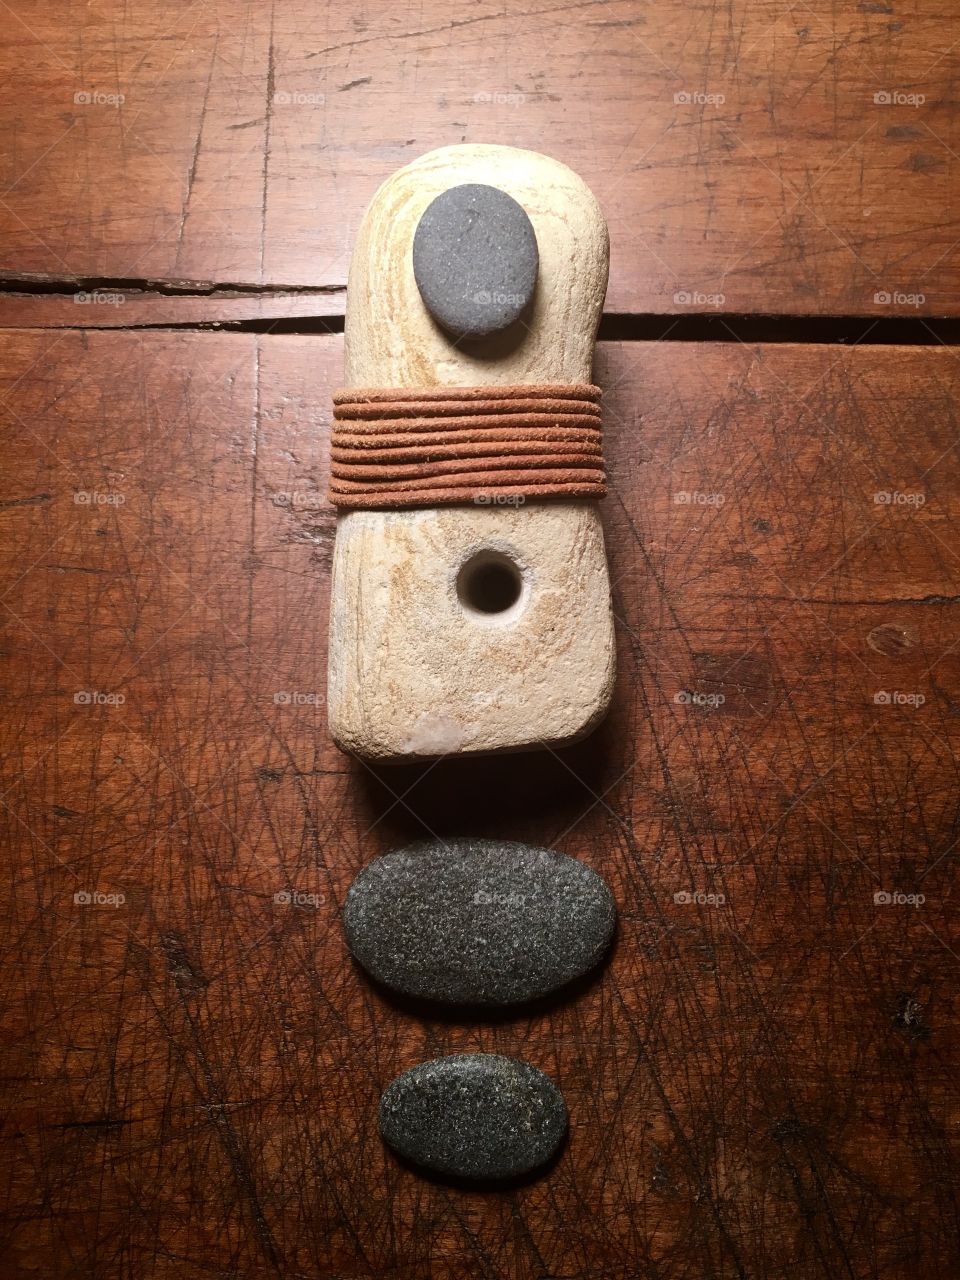 Dark stones with leather bound sandstone.